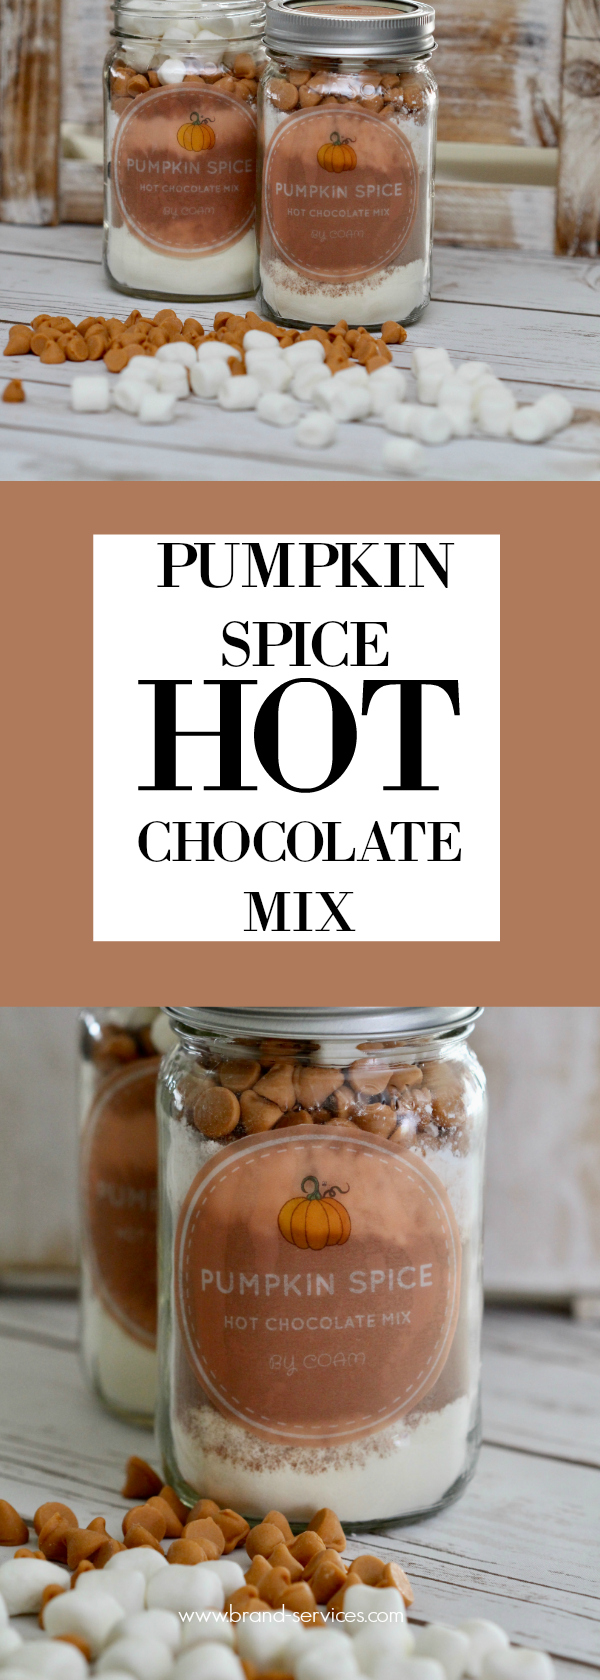 Pumpkin Spice Hot Chocolate Mix